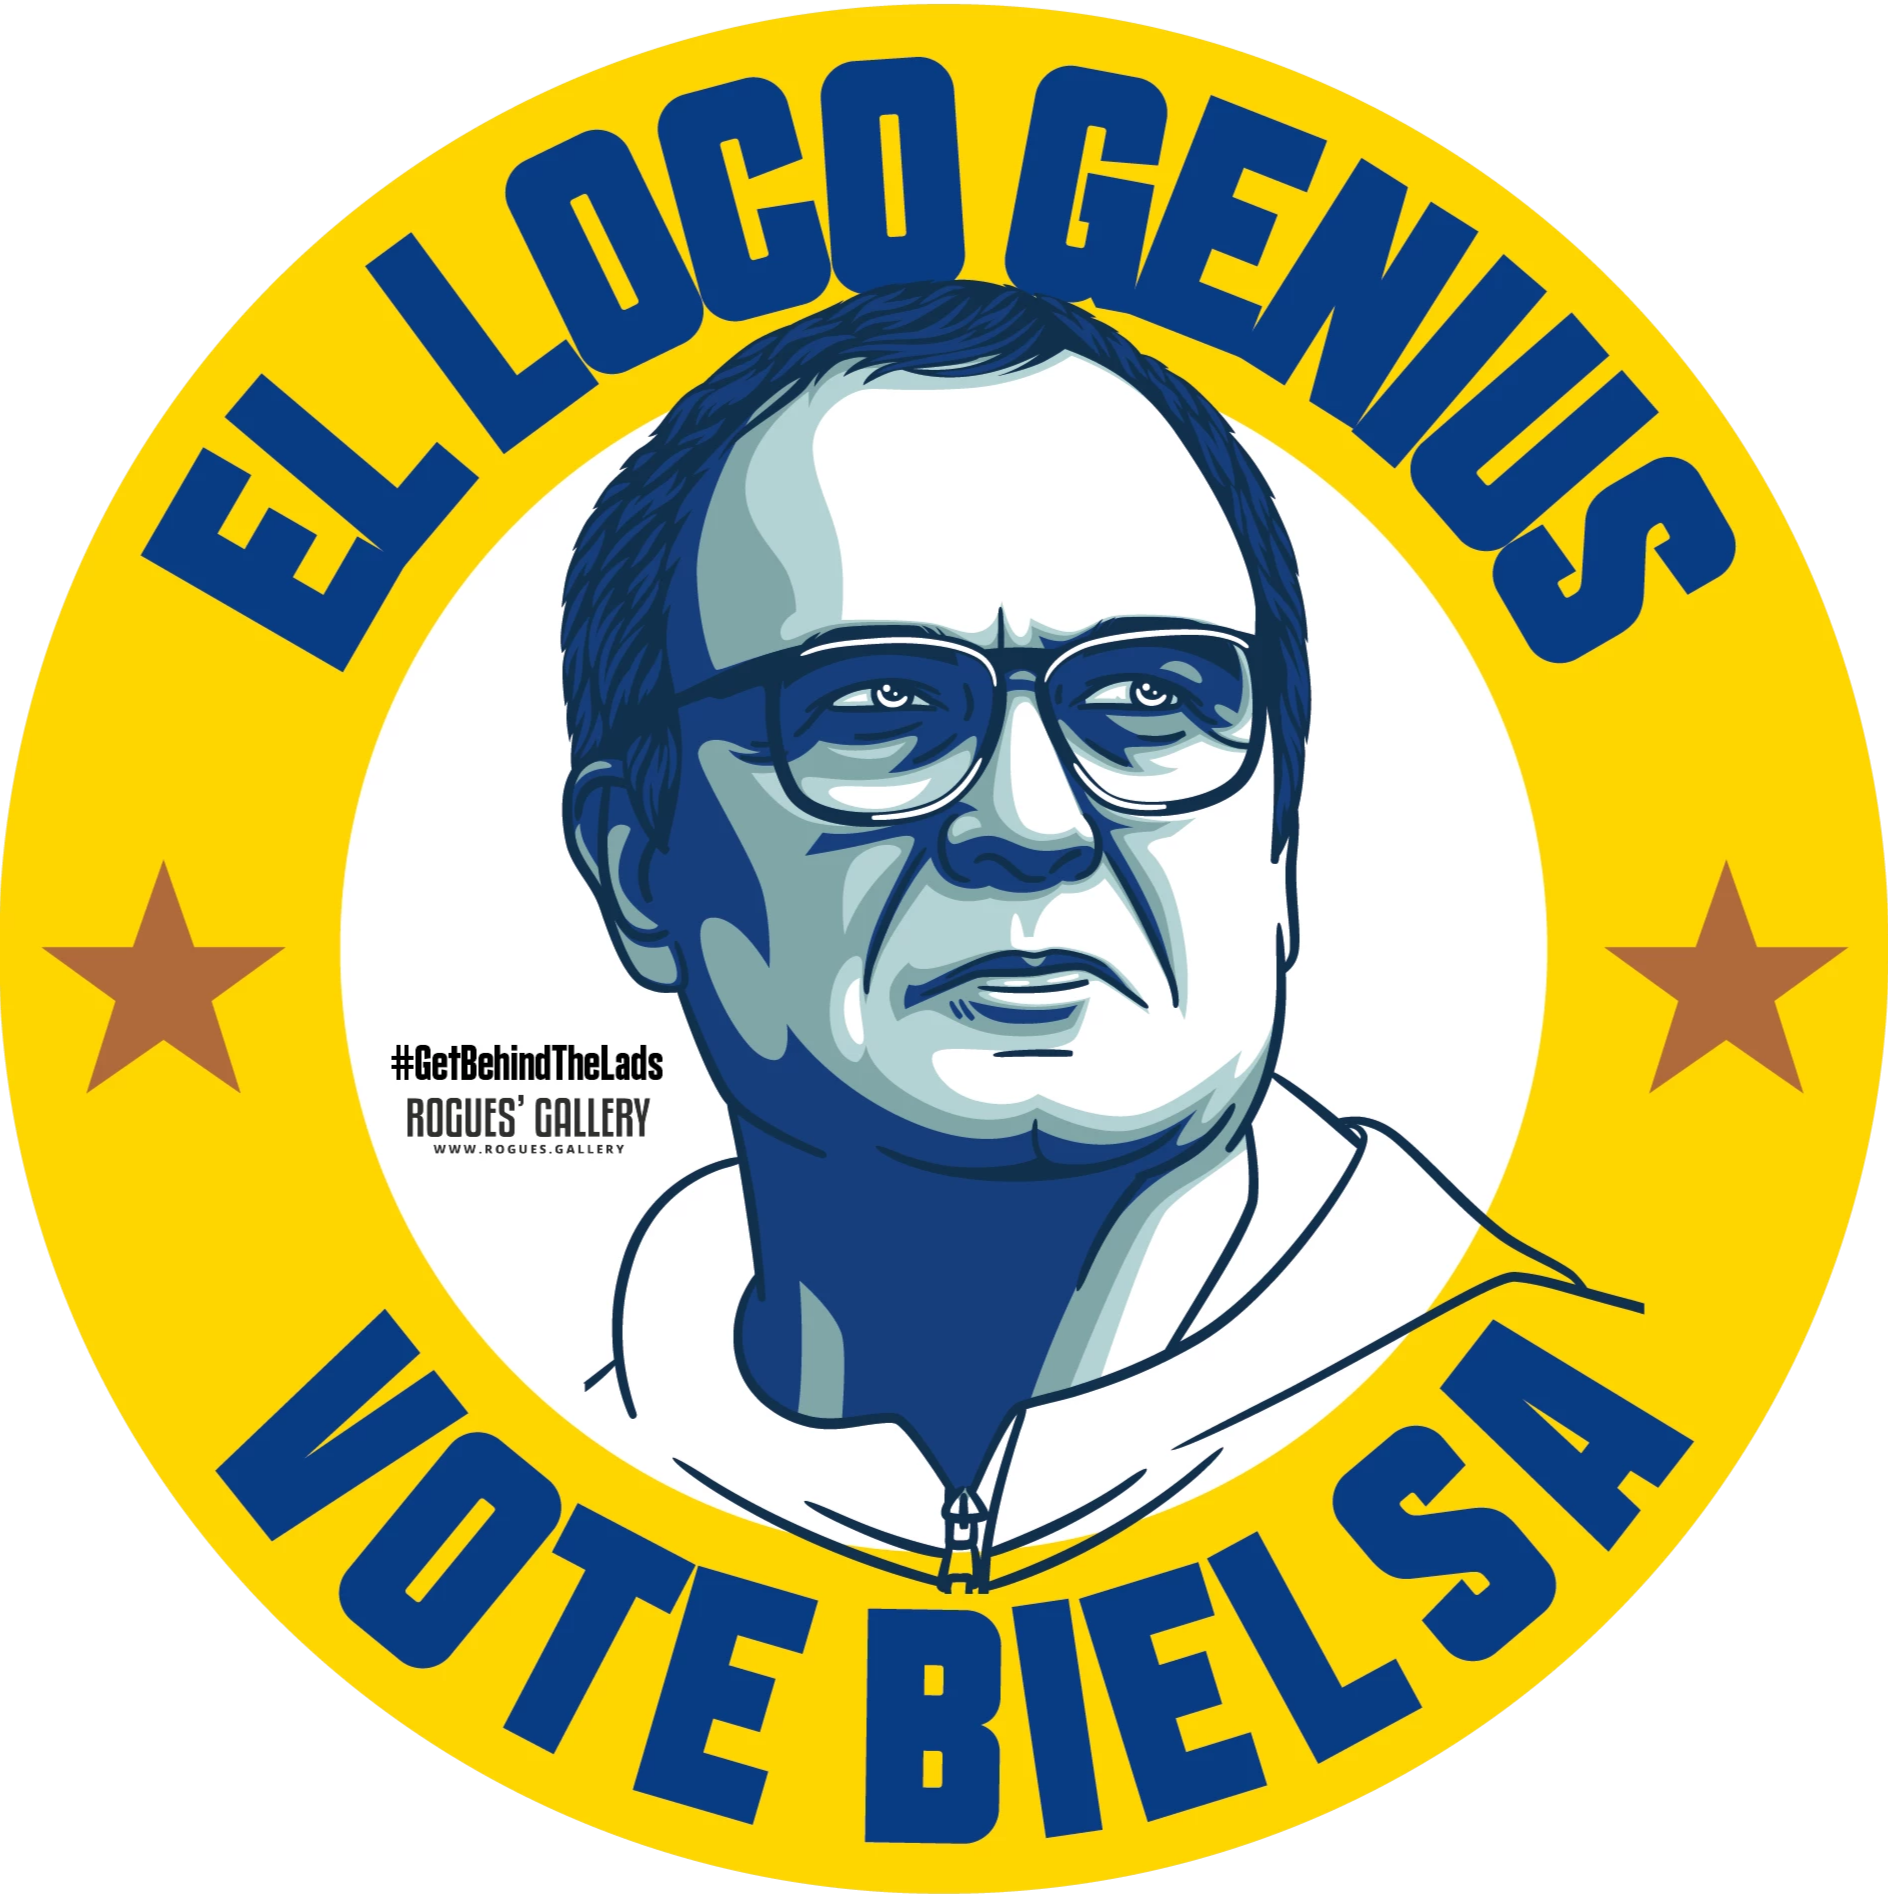 Marcelo Bielsa Leeds United Manager stickers Vote #GetBehindTheLads El Loco